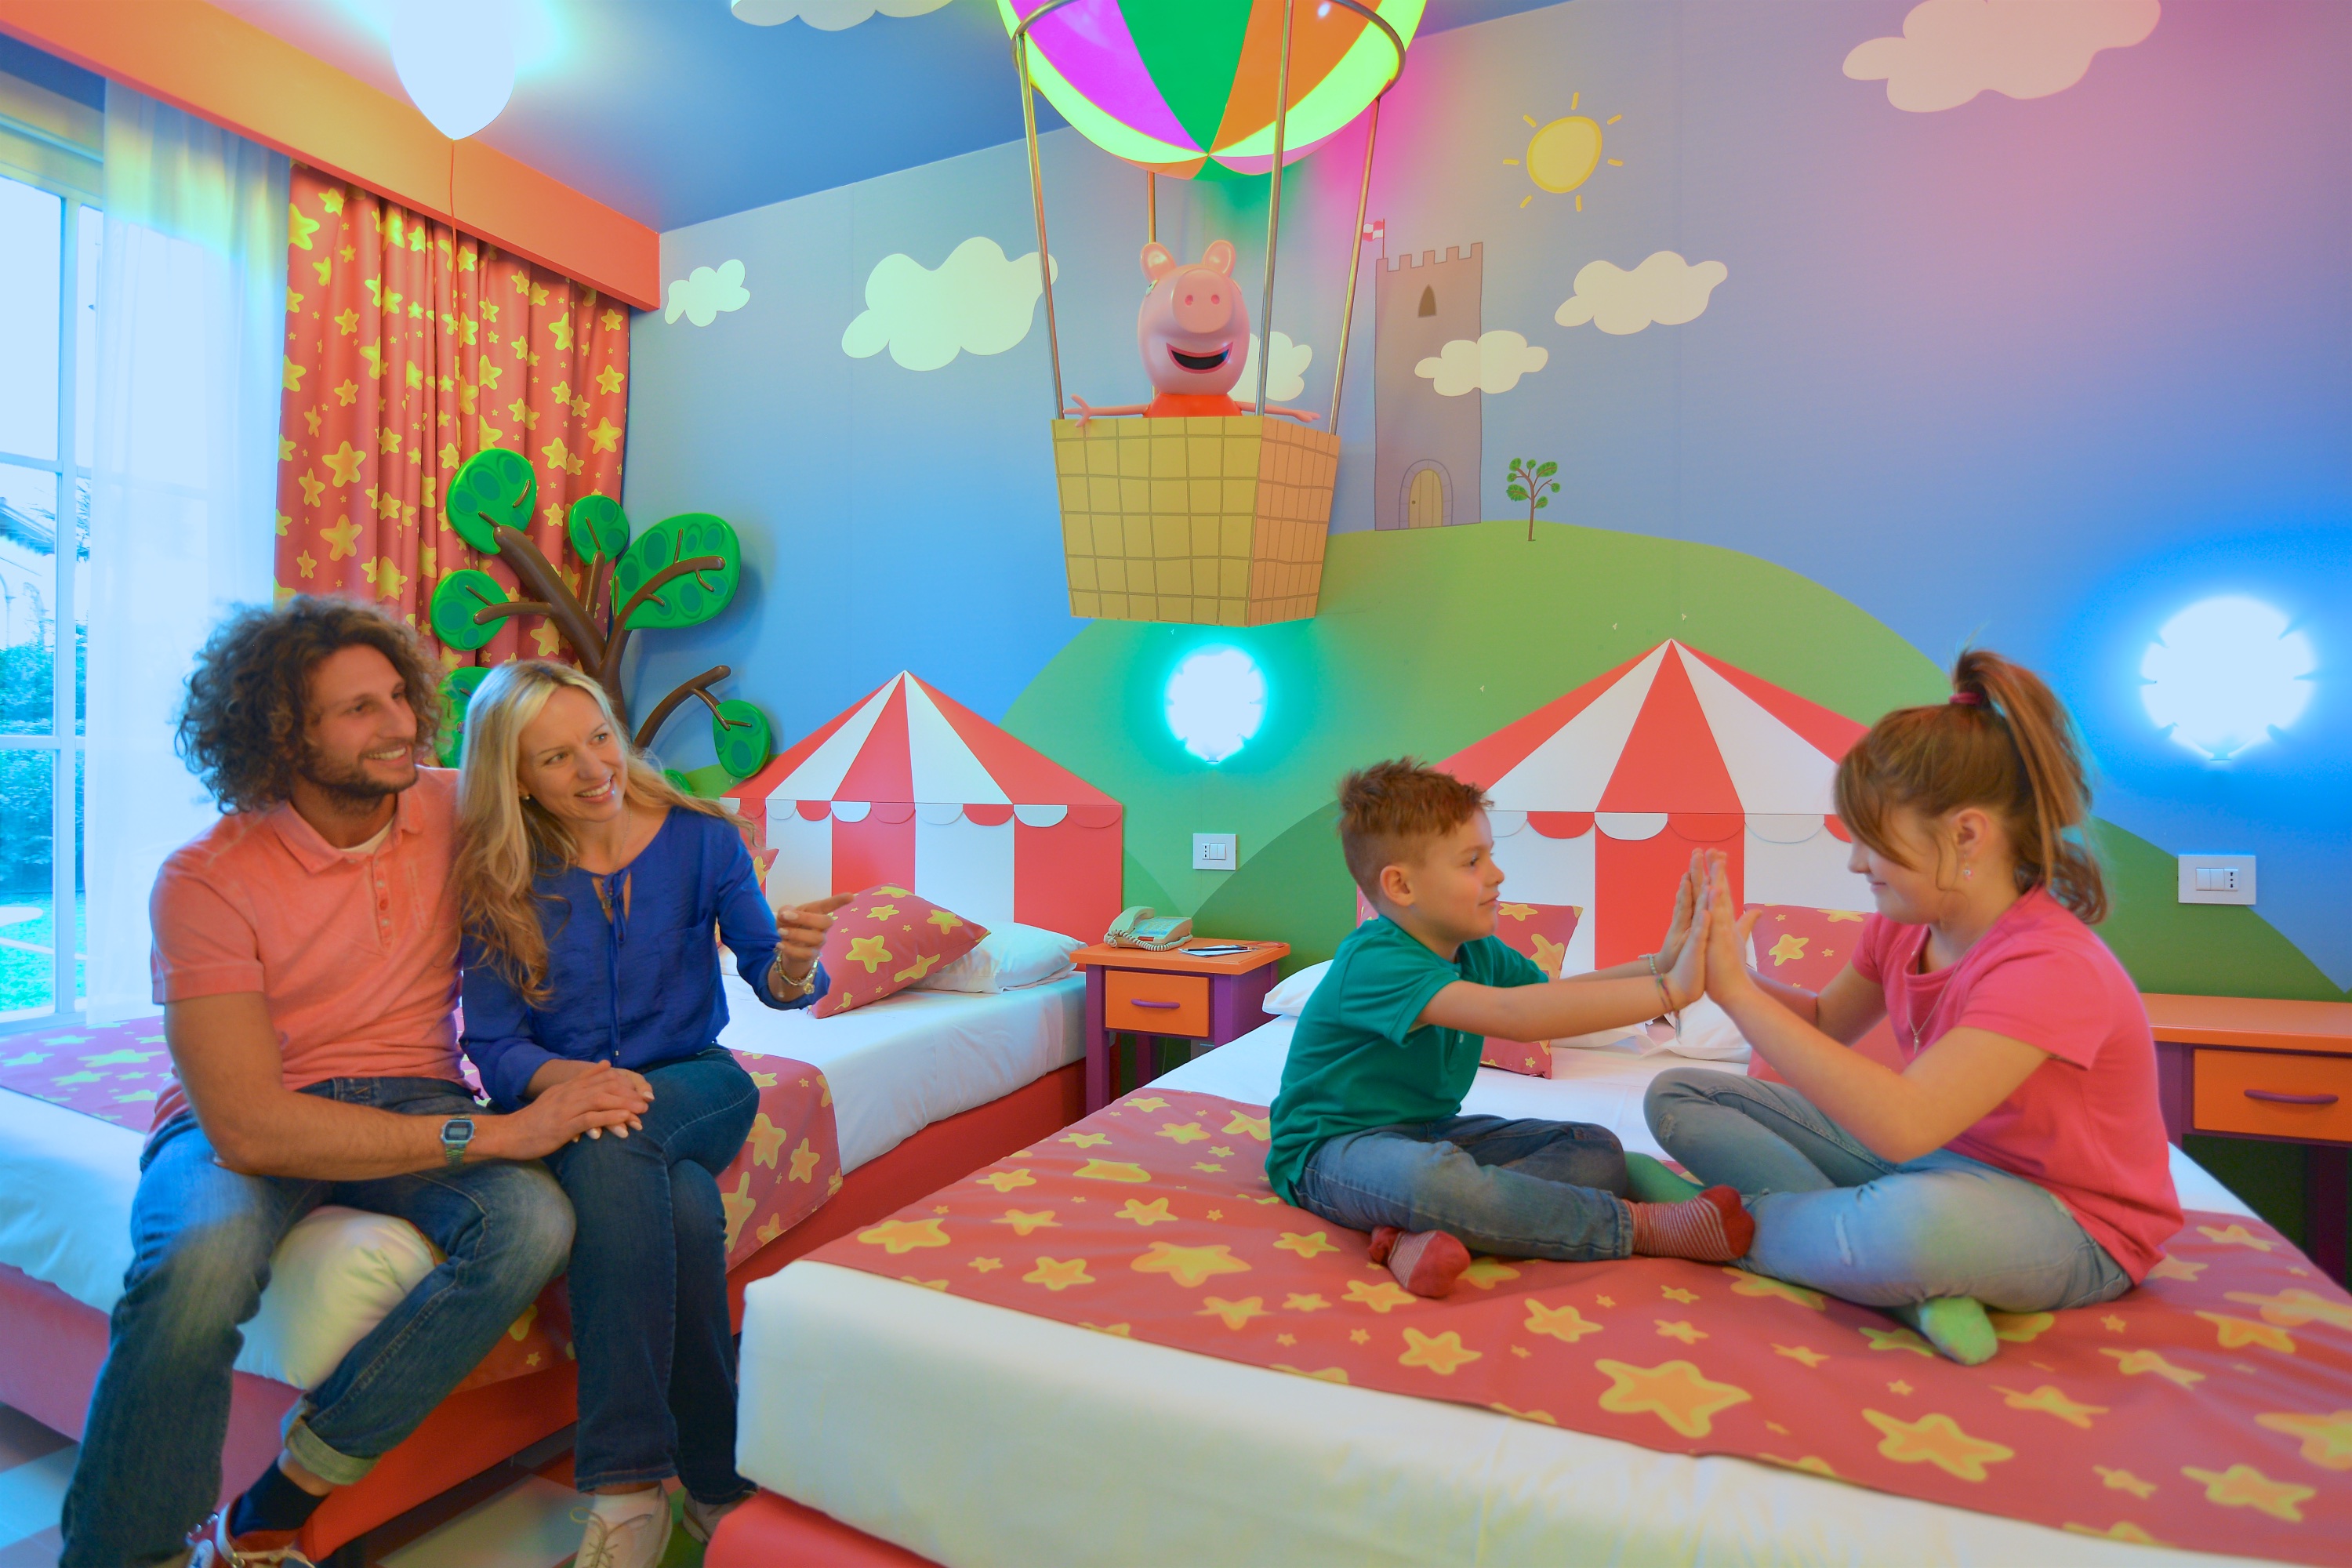 Gardaland Hotel - Peppa Pig Themed Room - Family